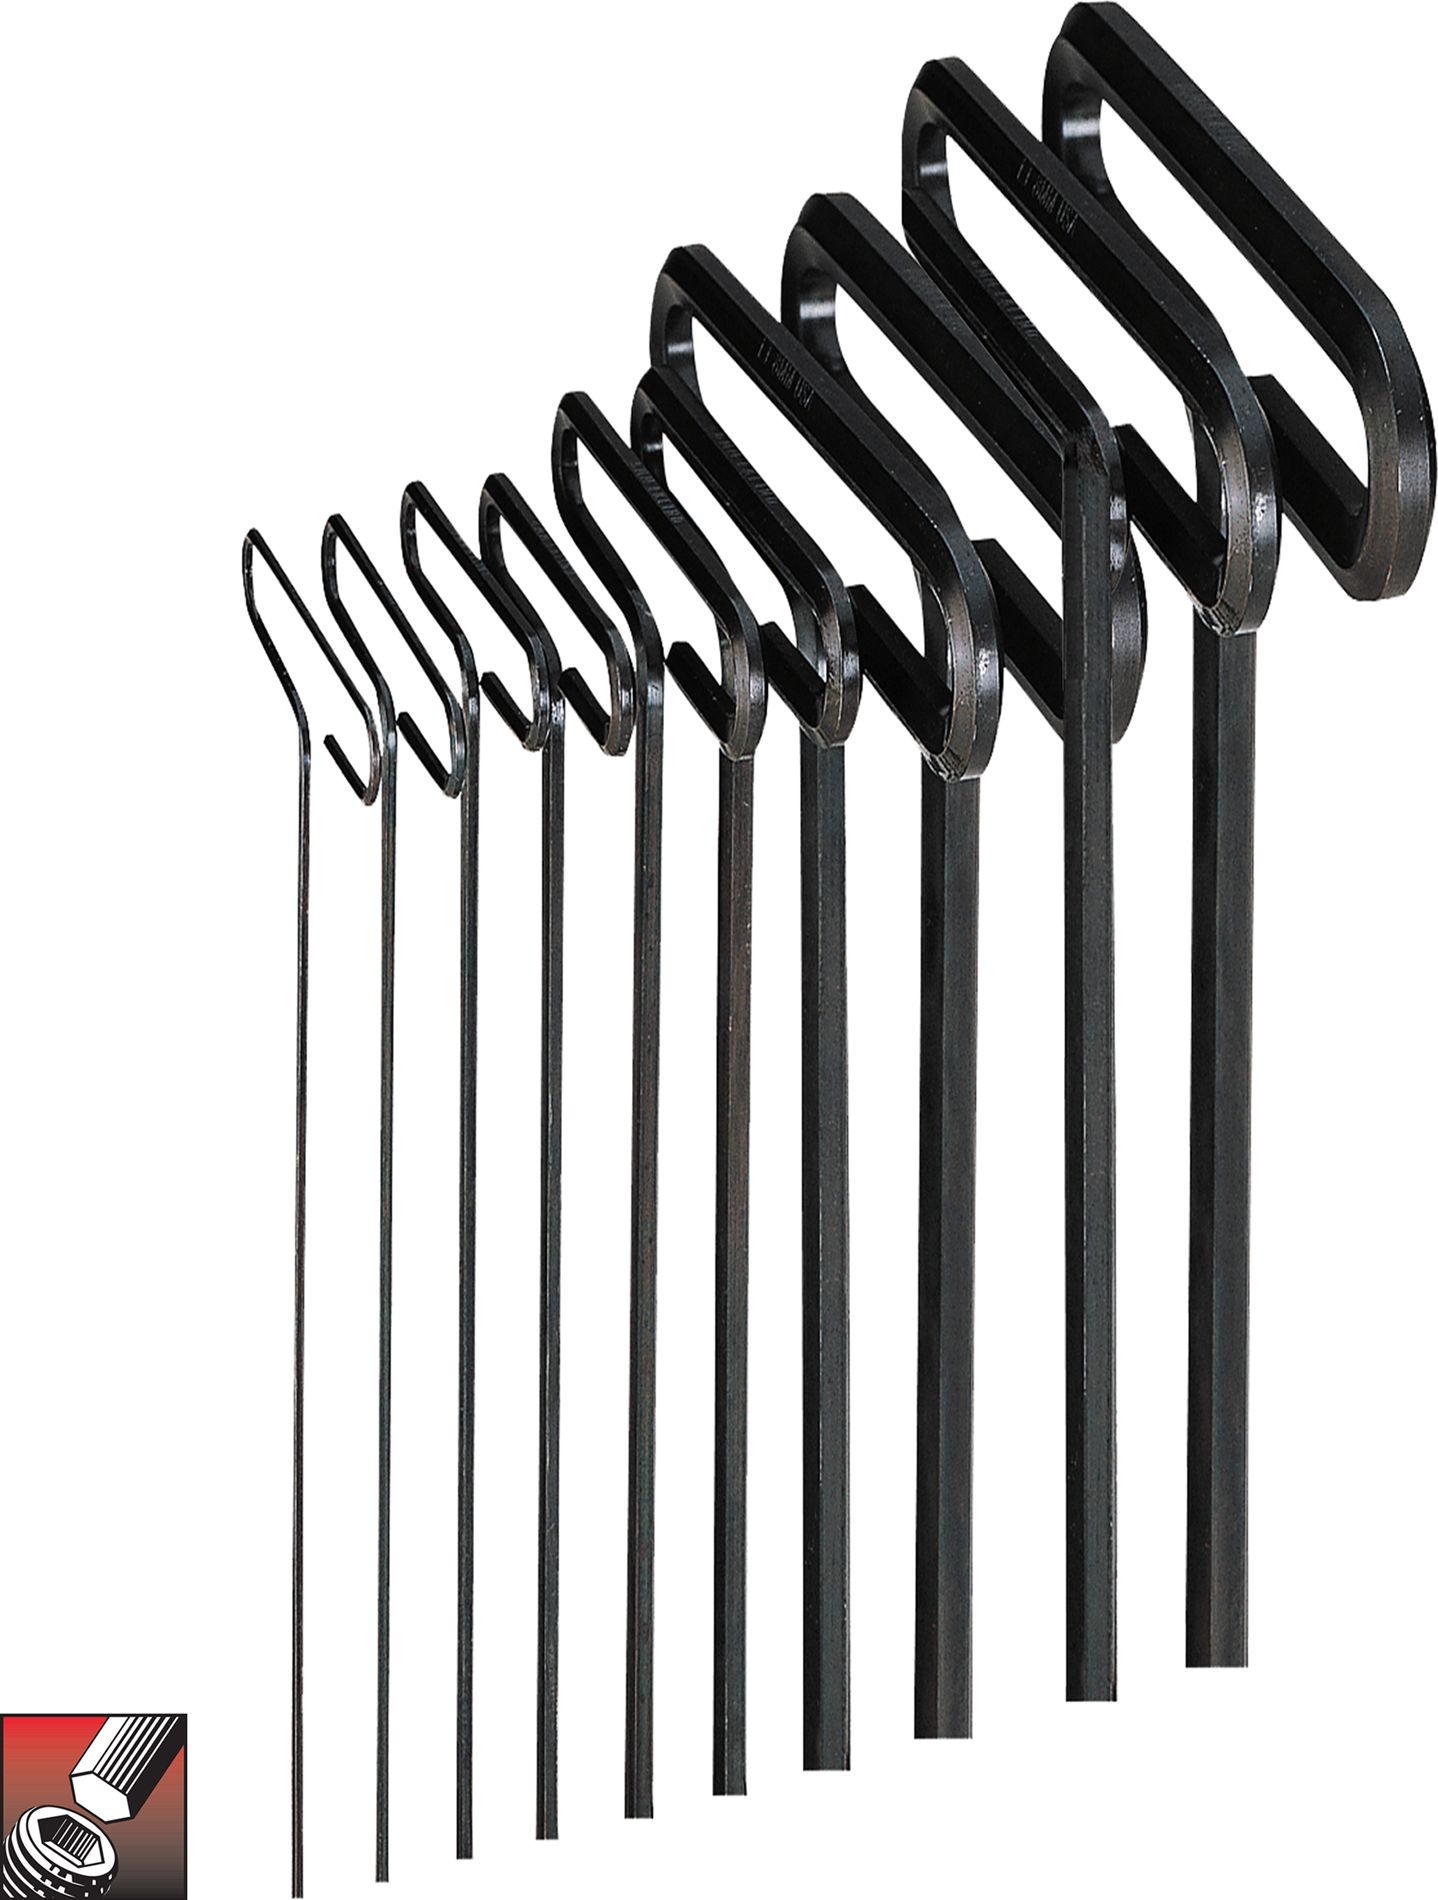 Eklind&#174 Standard Grip Hex T-Key Set, 9 inch Series, 10 keys: 3/32 to 3/8 Inch & Pouch